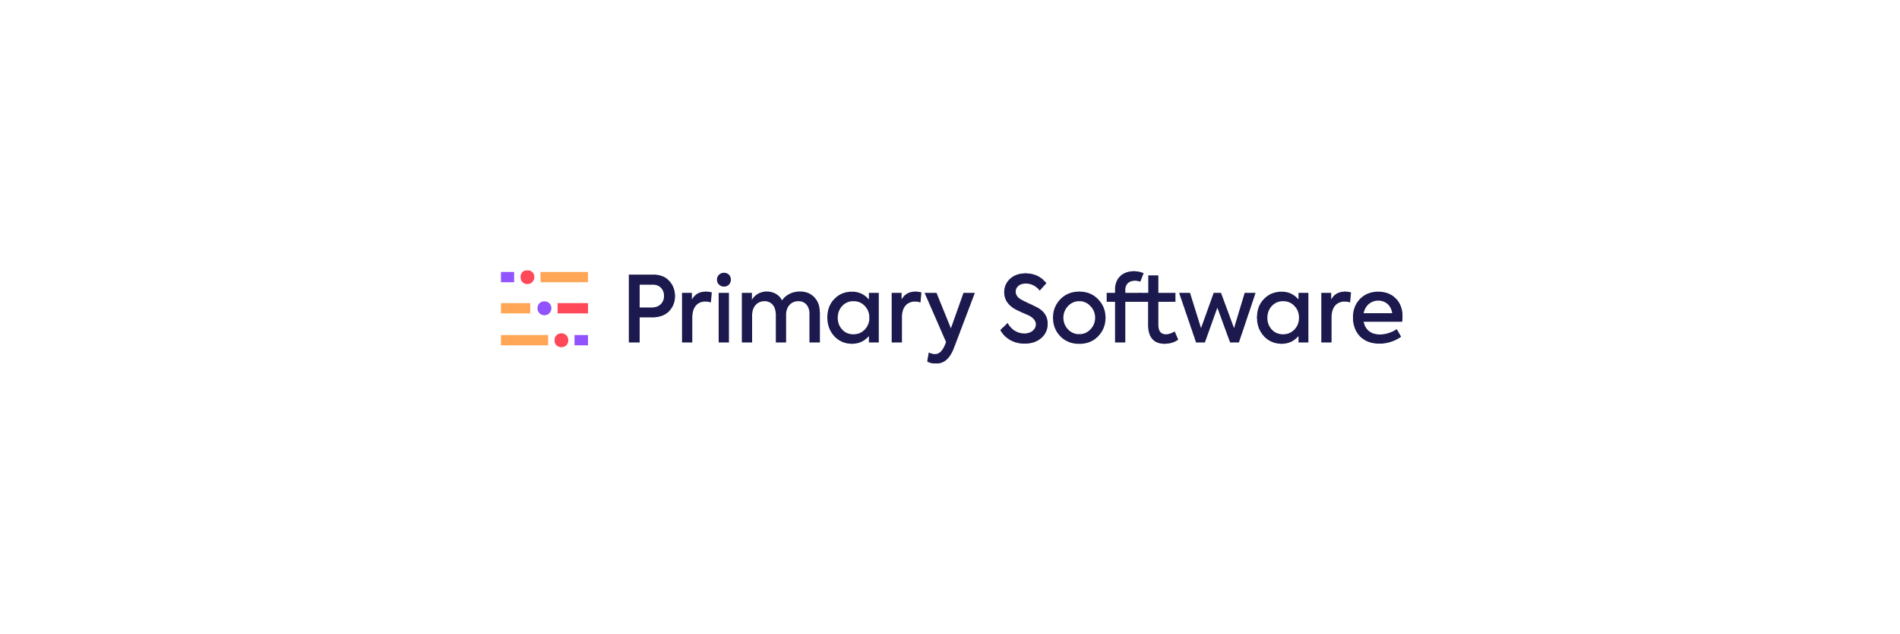 Horizontal version of Primary Software logo